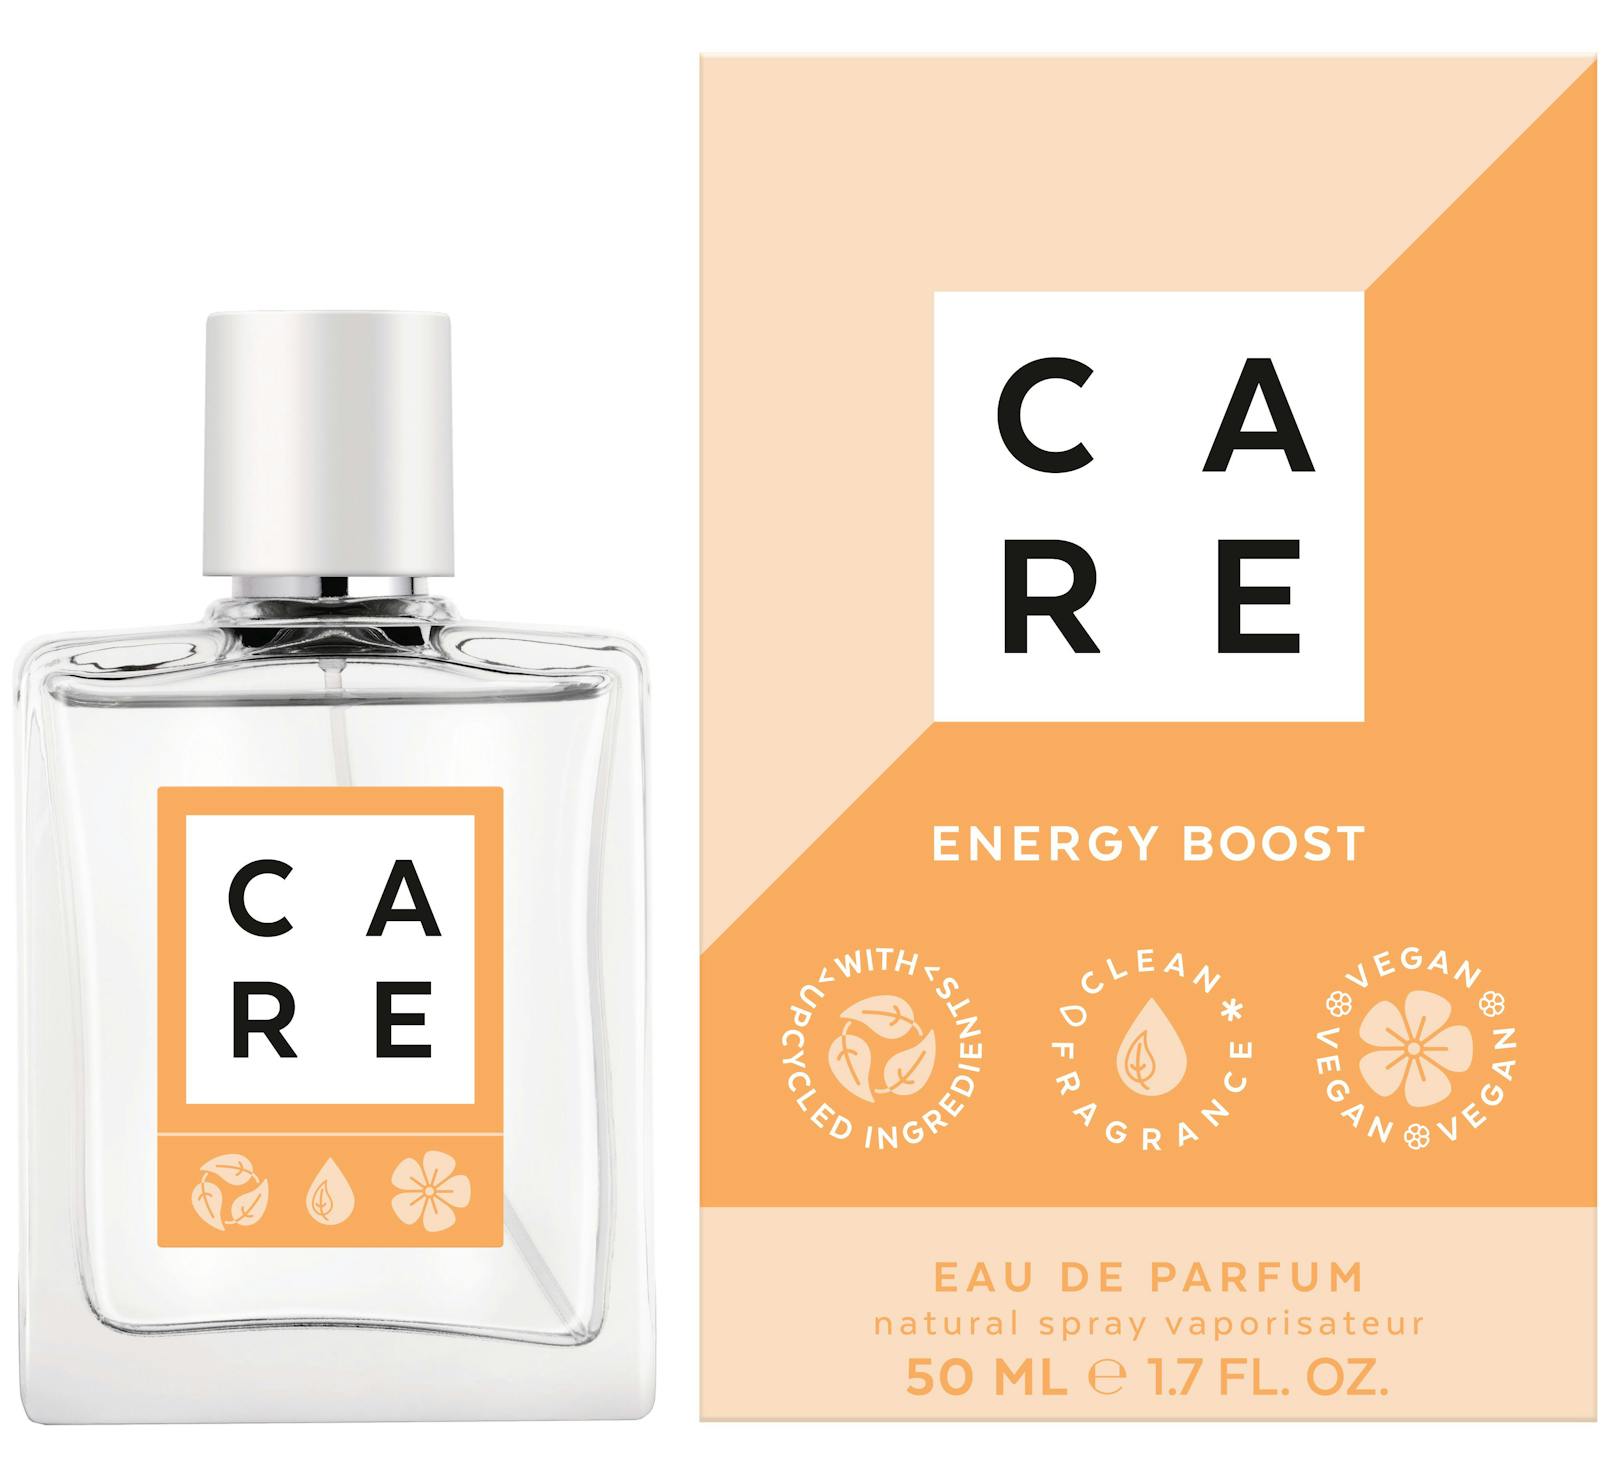 Flakon-Box "Energy Boost" von CARE Fragrances